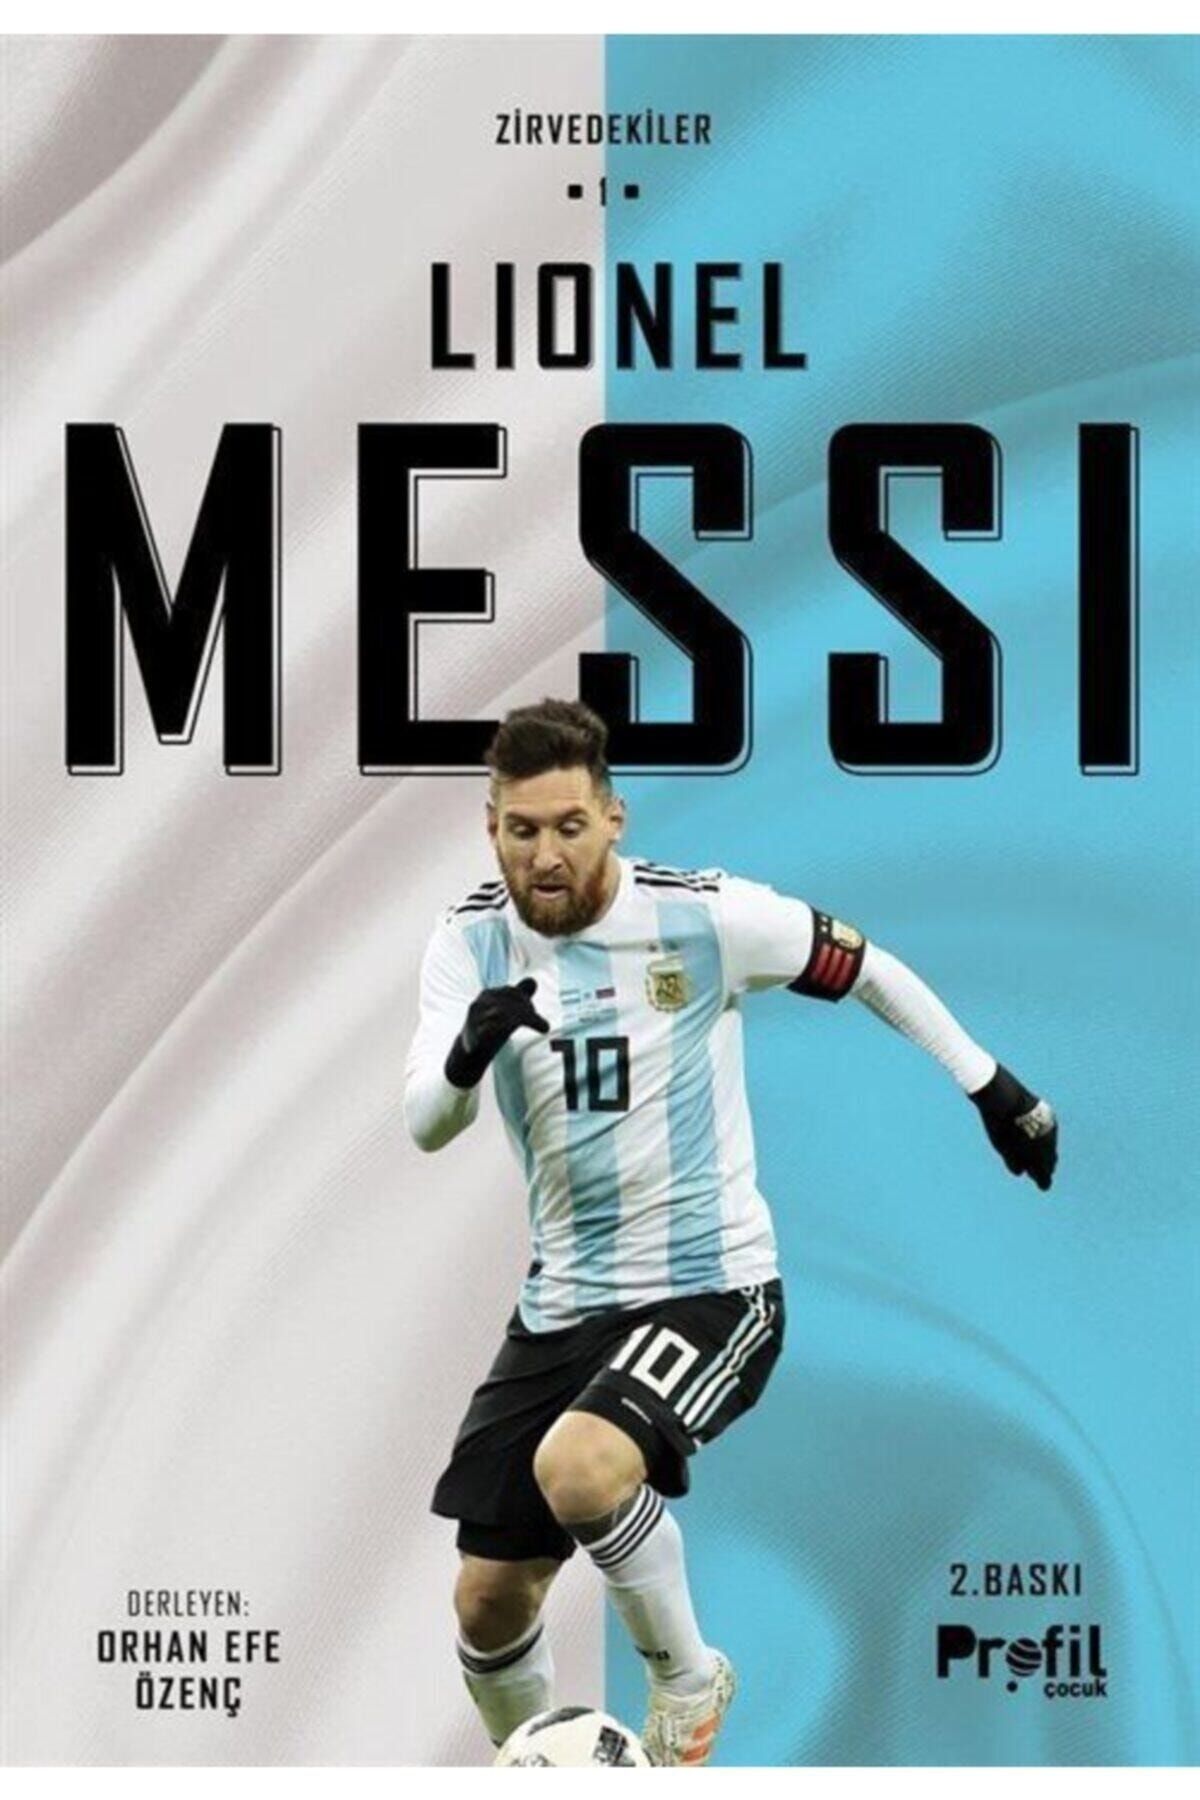 Profil Kitap Lionel Messi - Zirvedekiler 1 Orhan Efe Özenç - Orhan Efe Özenç